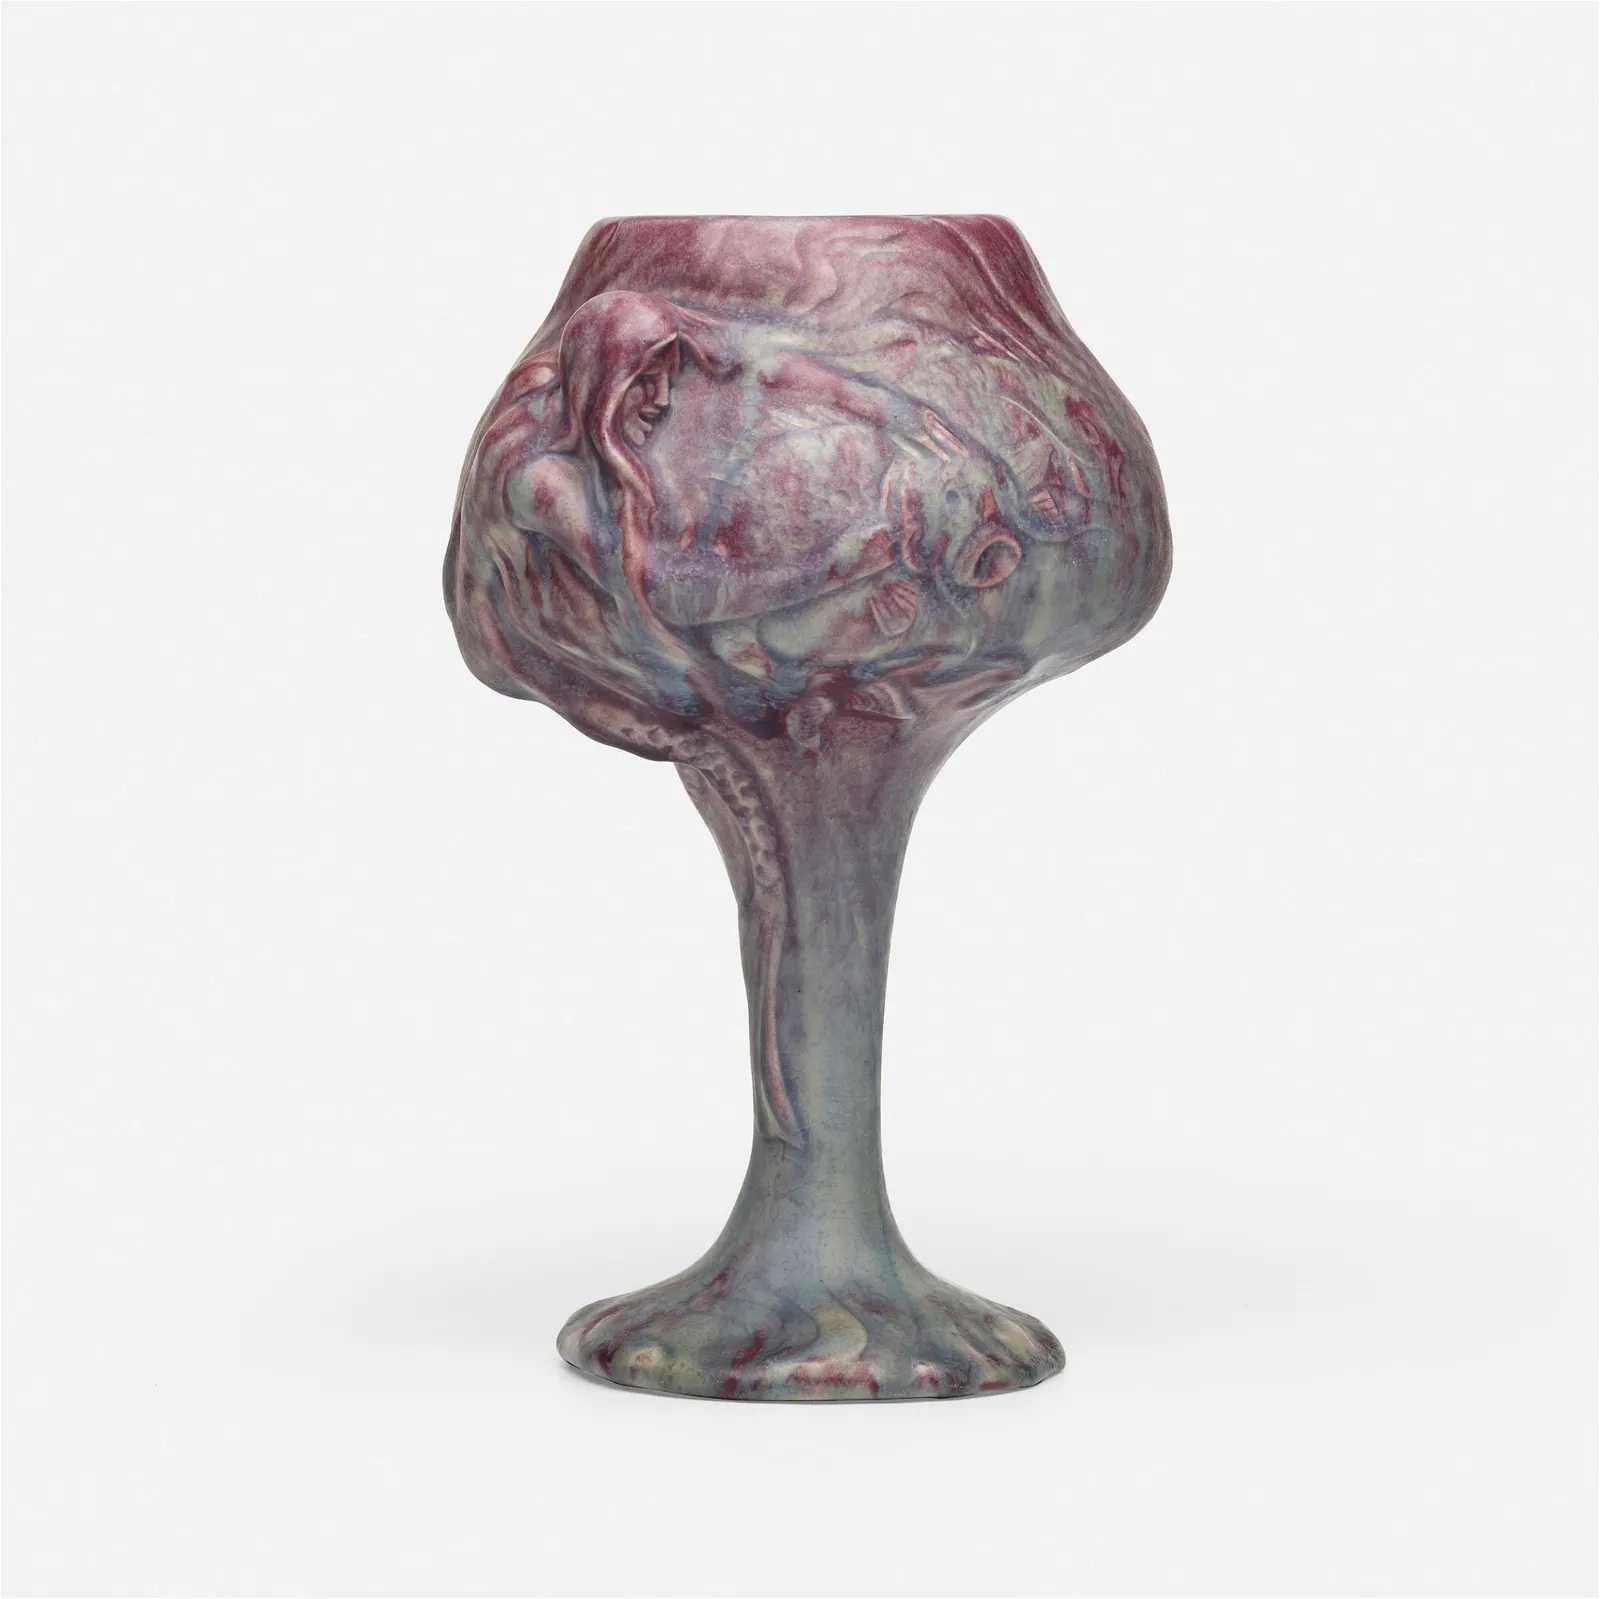 Artus Van Briggle for Van Briggle Pottery, chalice (toast cup), estimated at $25,000-$35,000 at Rago.